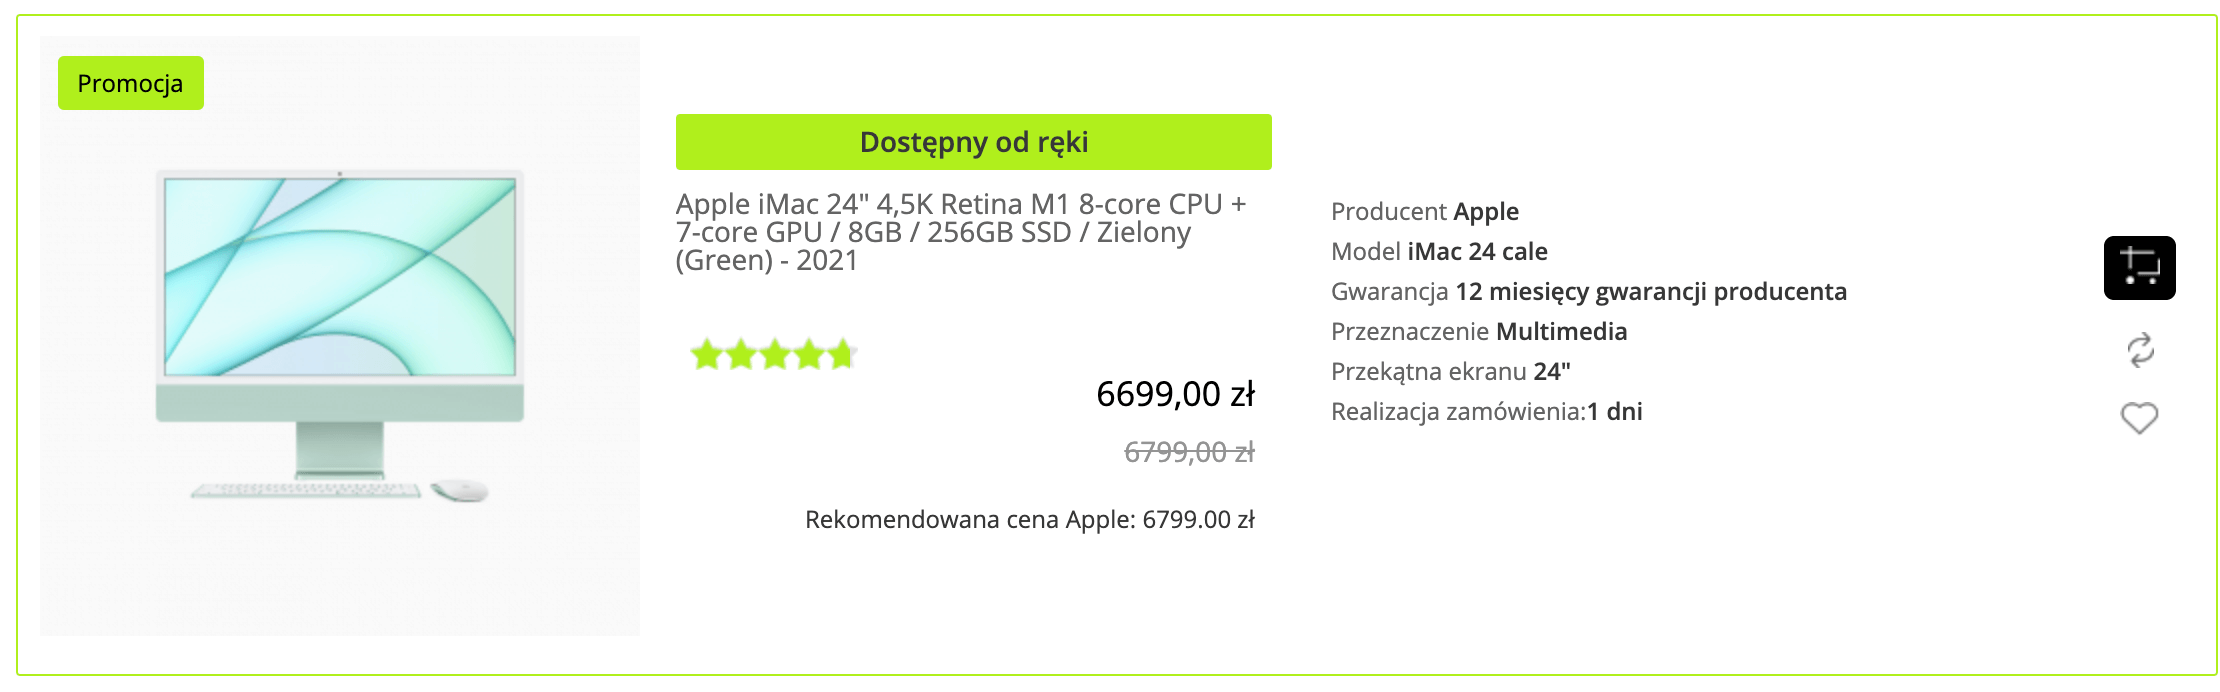 Apple iMac 24 4,5K Retina M1 8-core CPU + 7-core GPU / 8GB / 256GB SSD / Zielony (Green) - 2021 - MJV83ZE/A